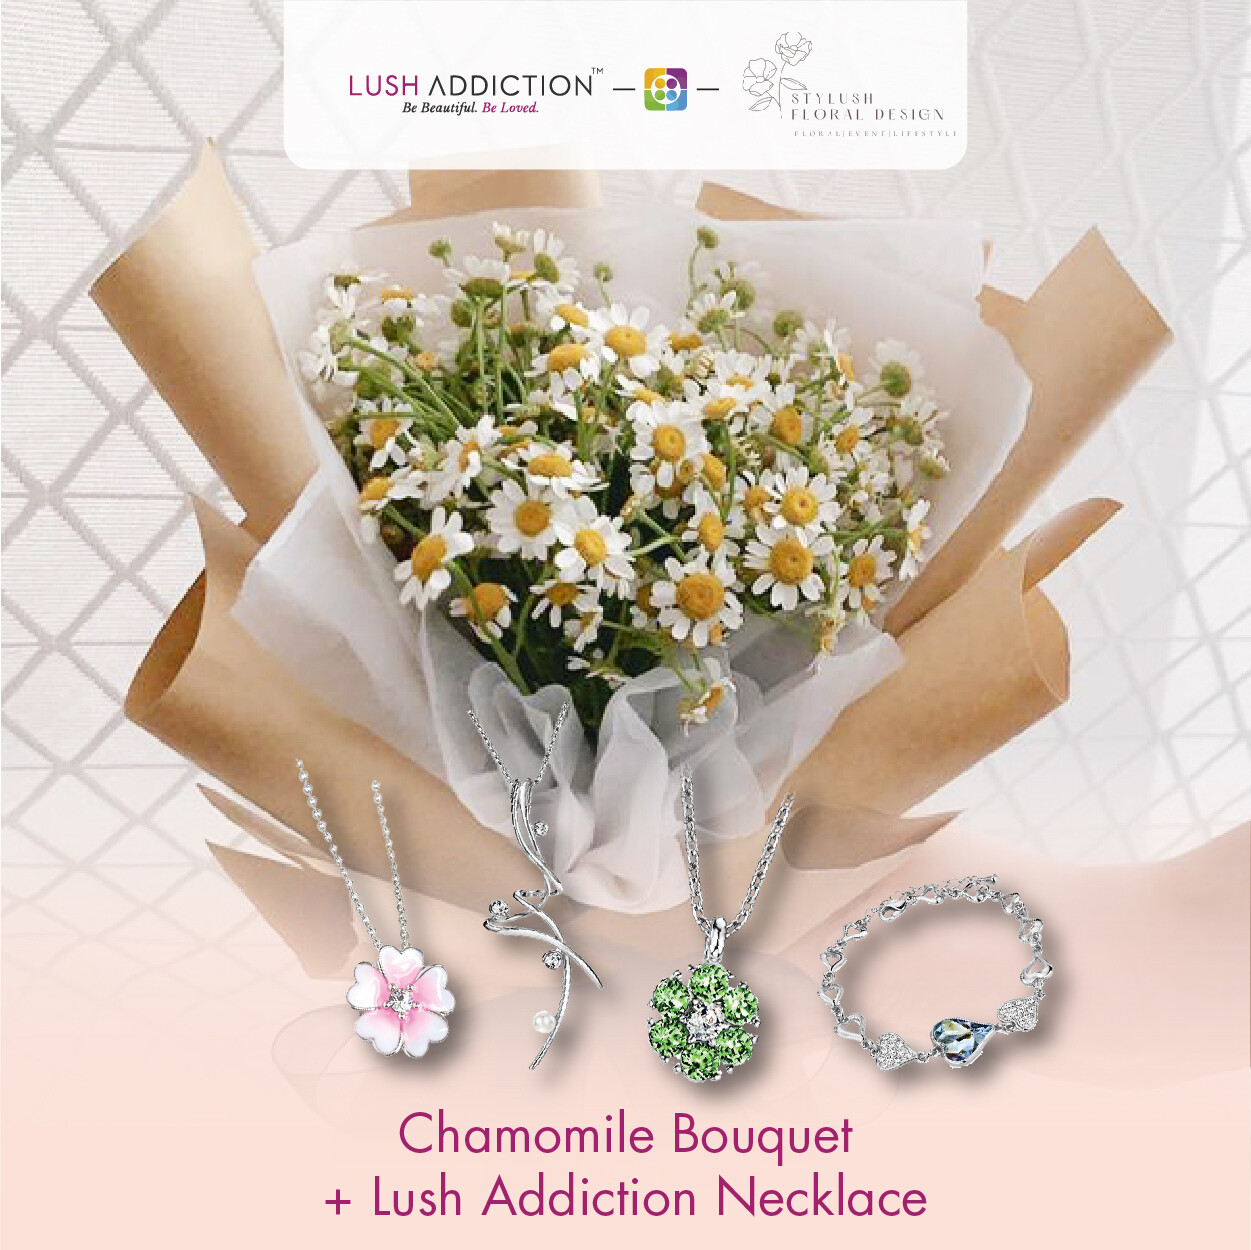 Chamomile Bouquet + Lush Addiction Necklace (By: Stylush Studio Floral Design from Kota Kinabalu)